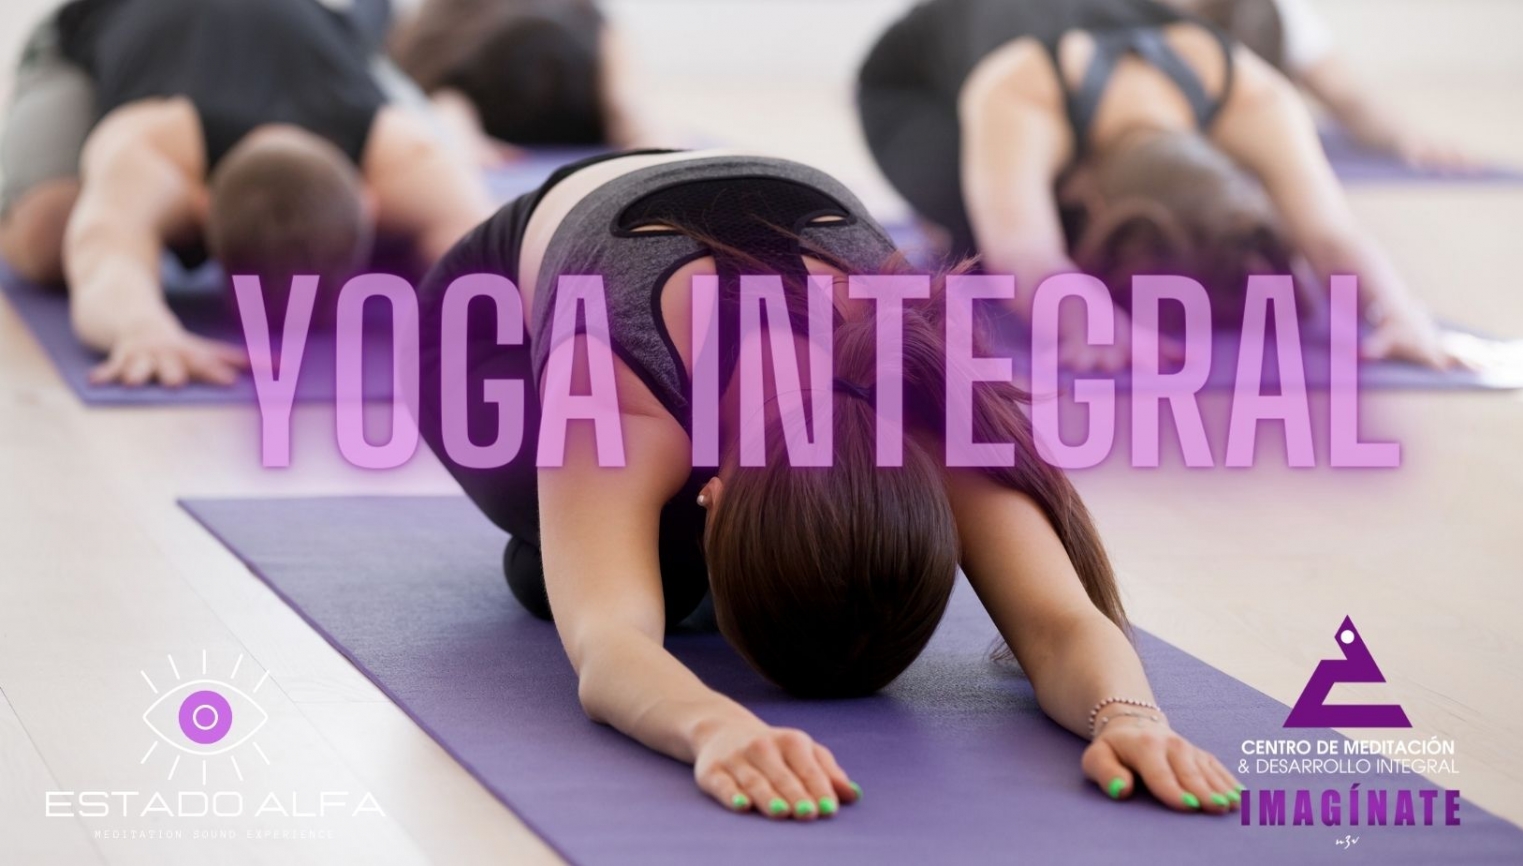 Yoga Integral - foto 1/1